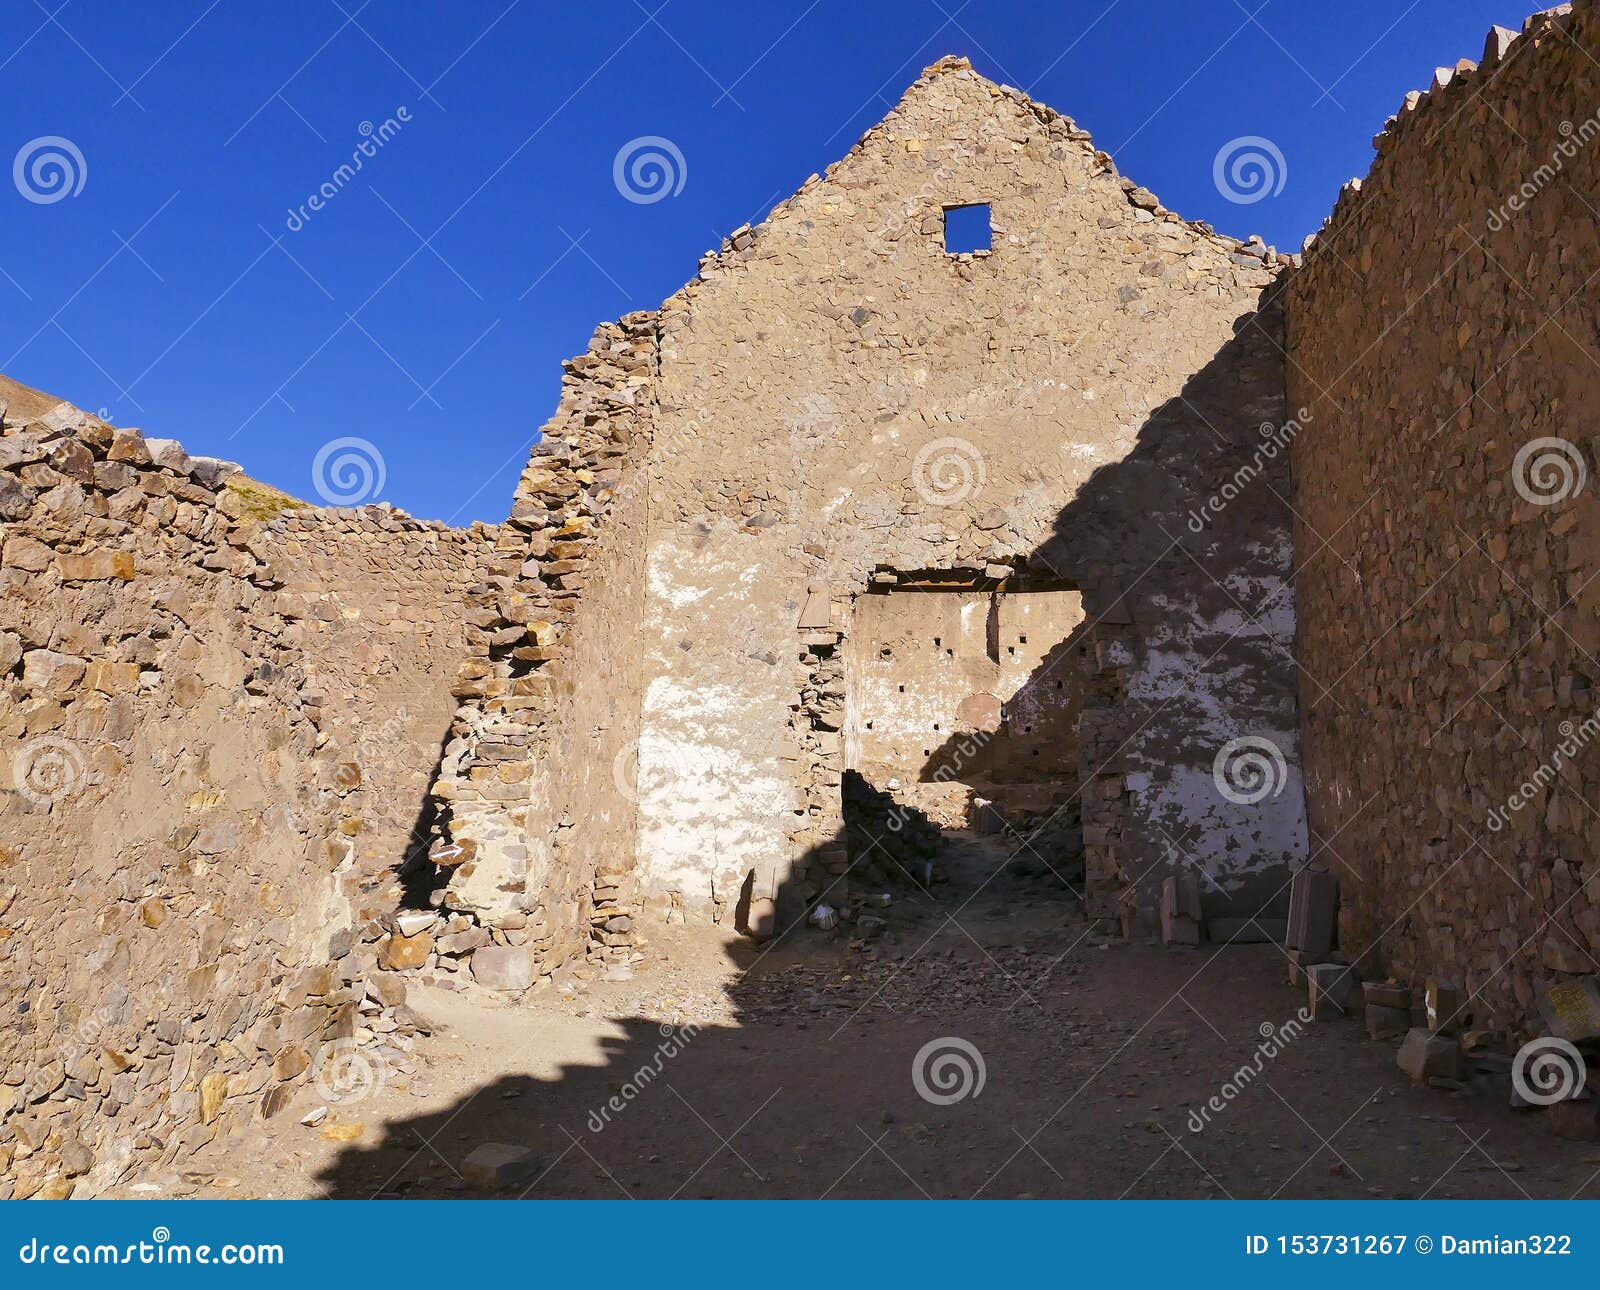 ruins of a former mining town pueblo fantasma